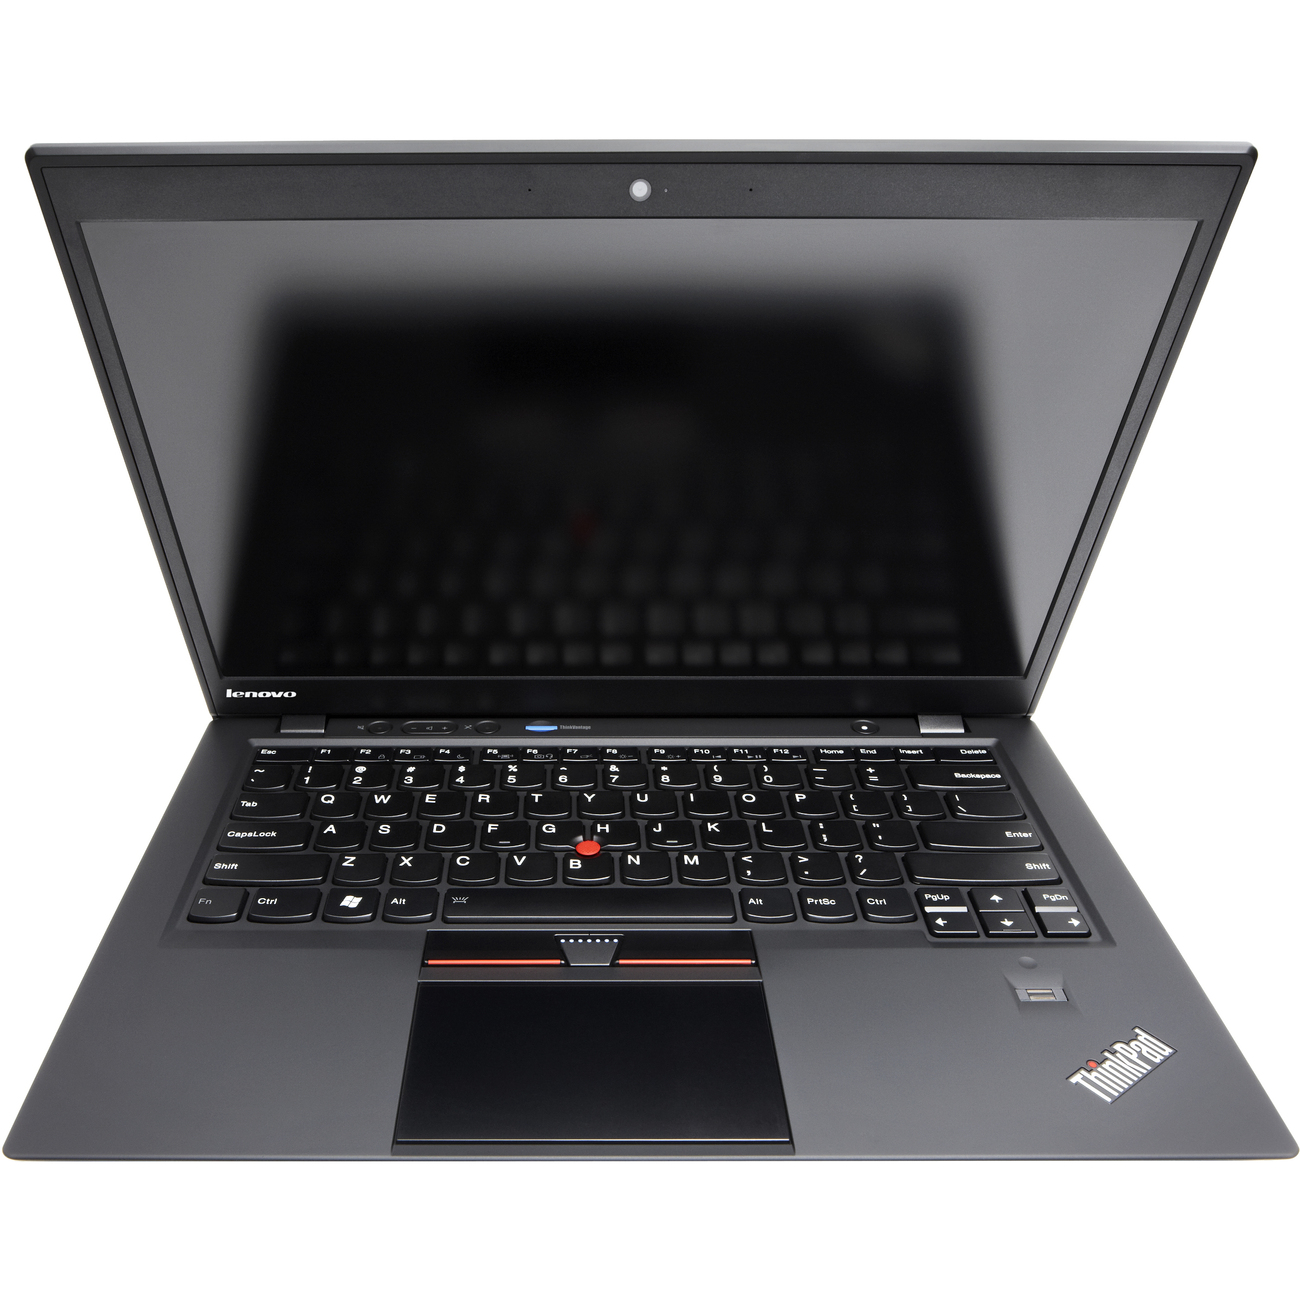 Used - Very Good: ThinkPad X1 Carbon20A70037US Intel Core i7 8GB